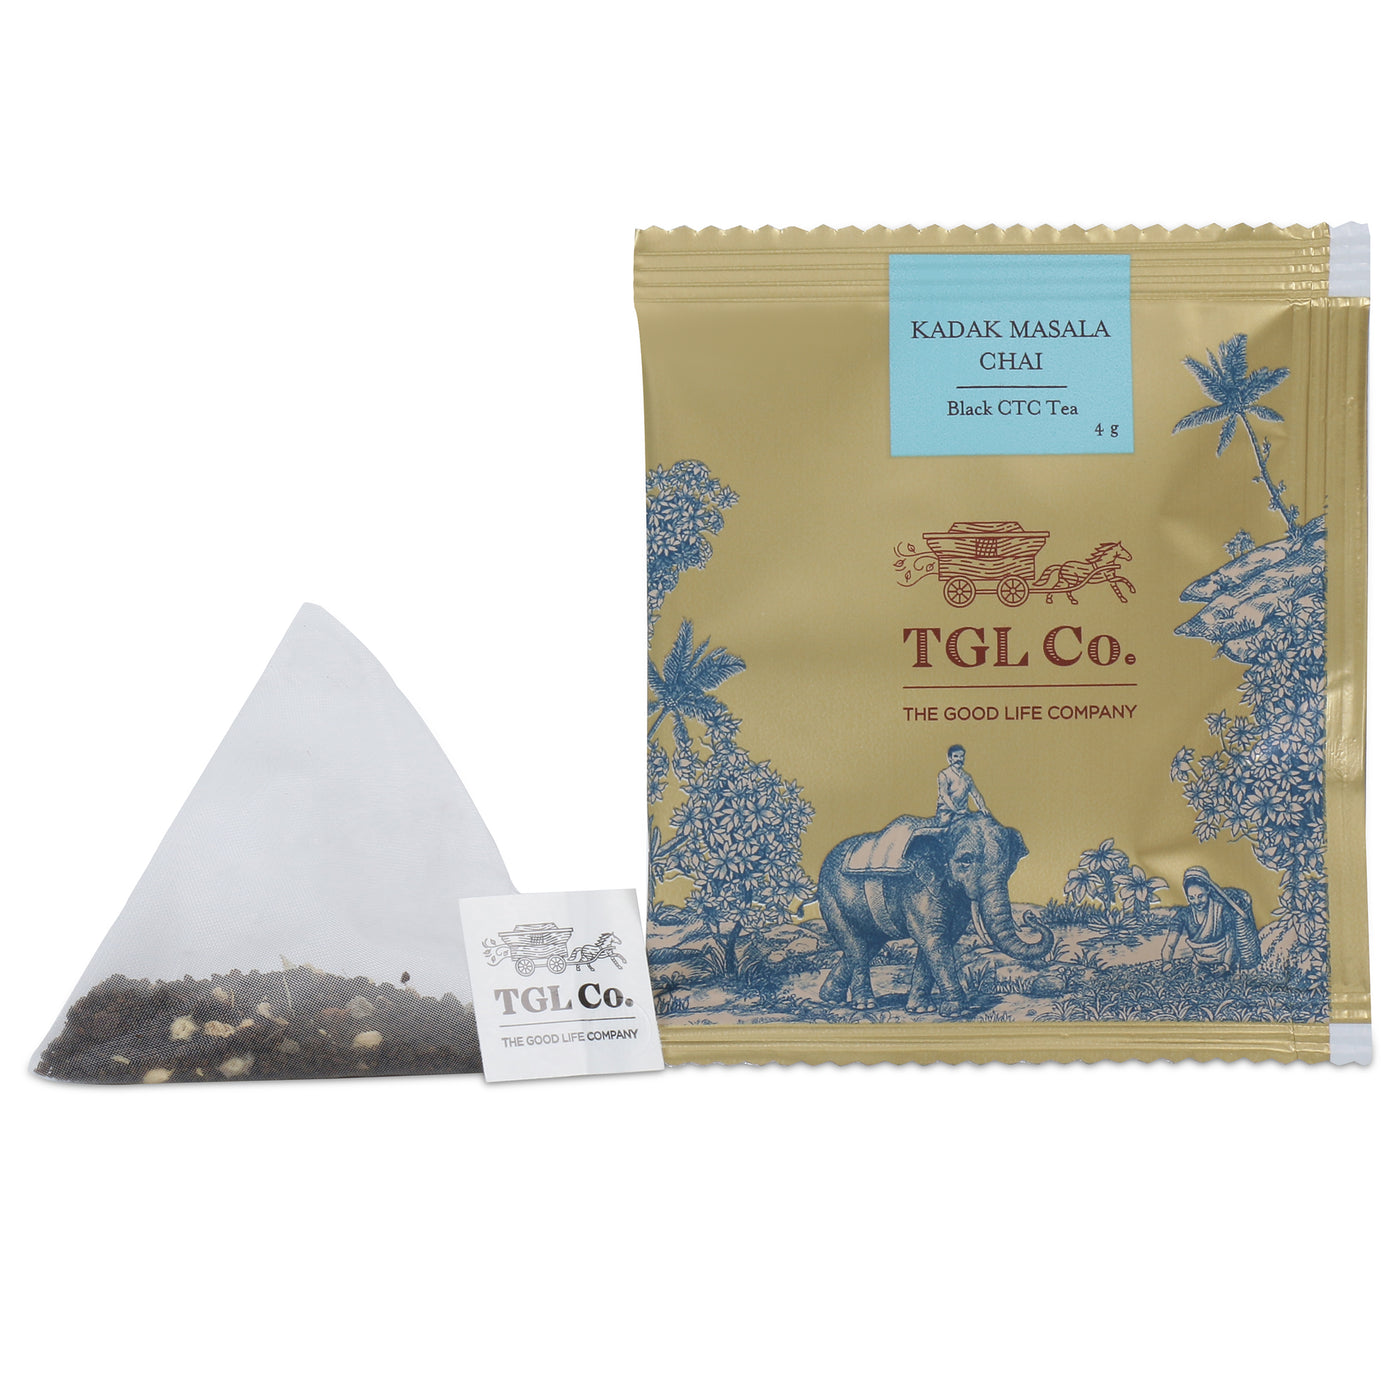 Kadak Masala Chai Tea Bag / Loose Tea Leaf